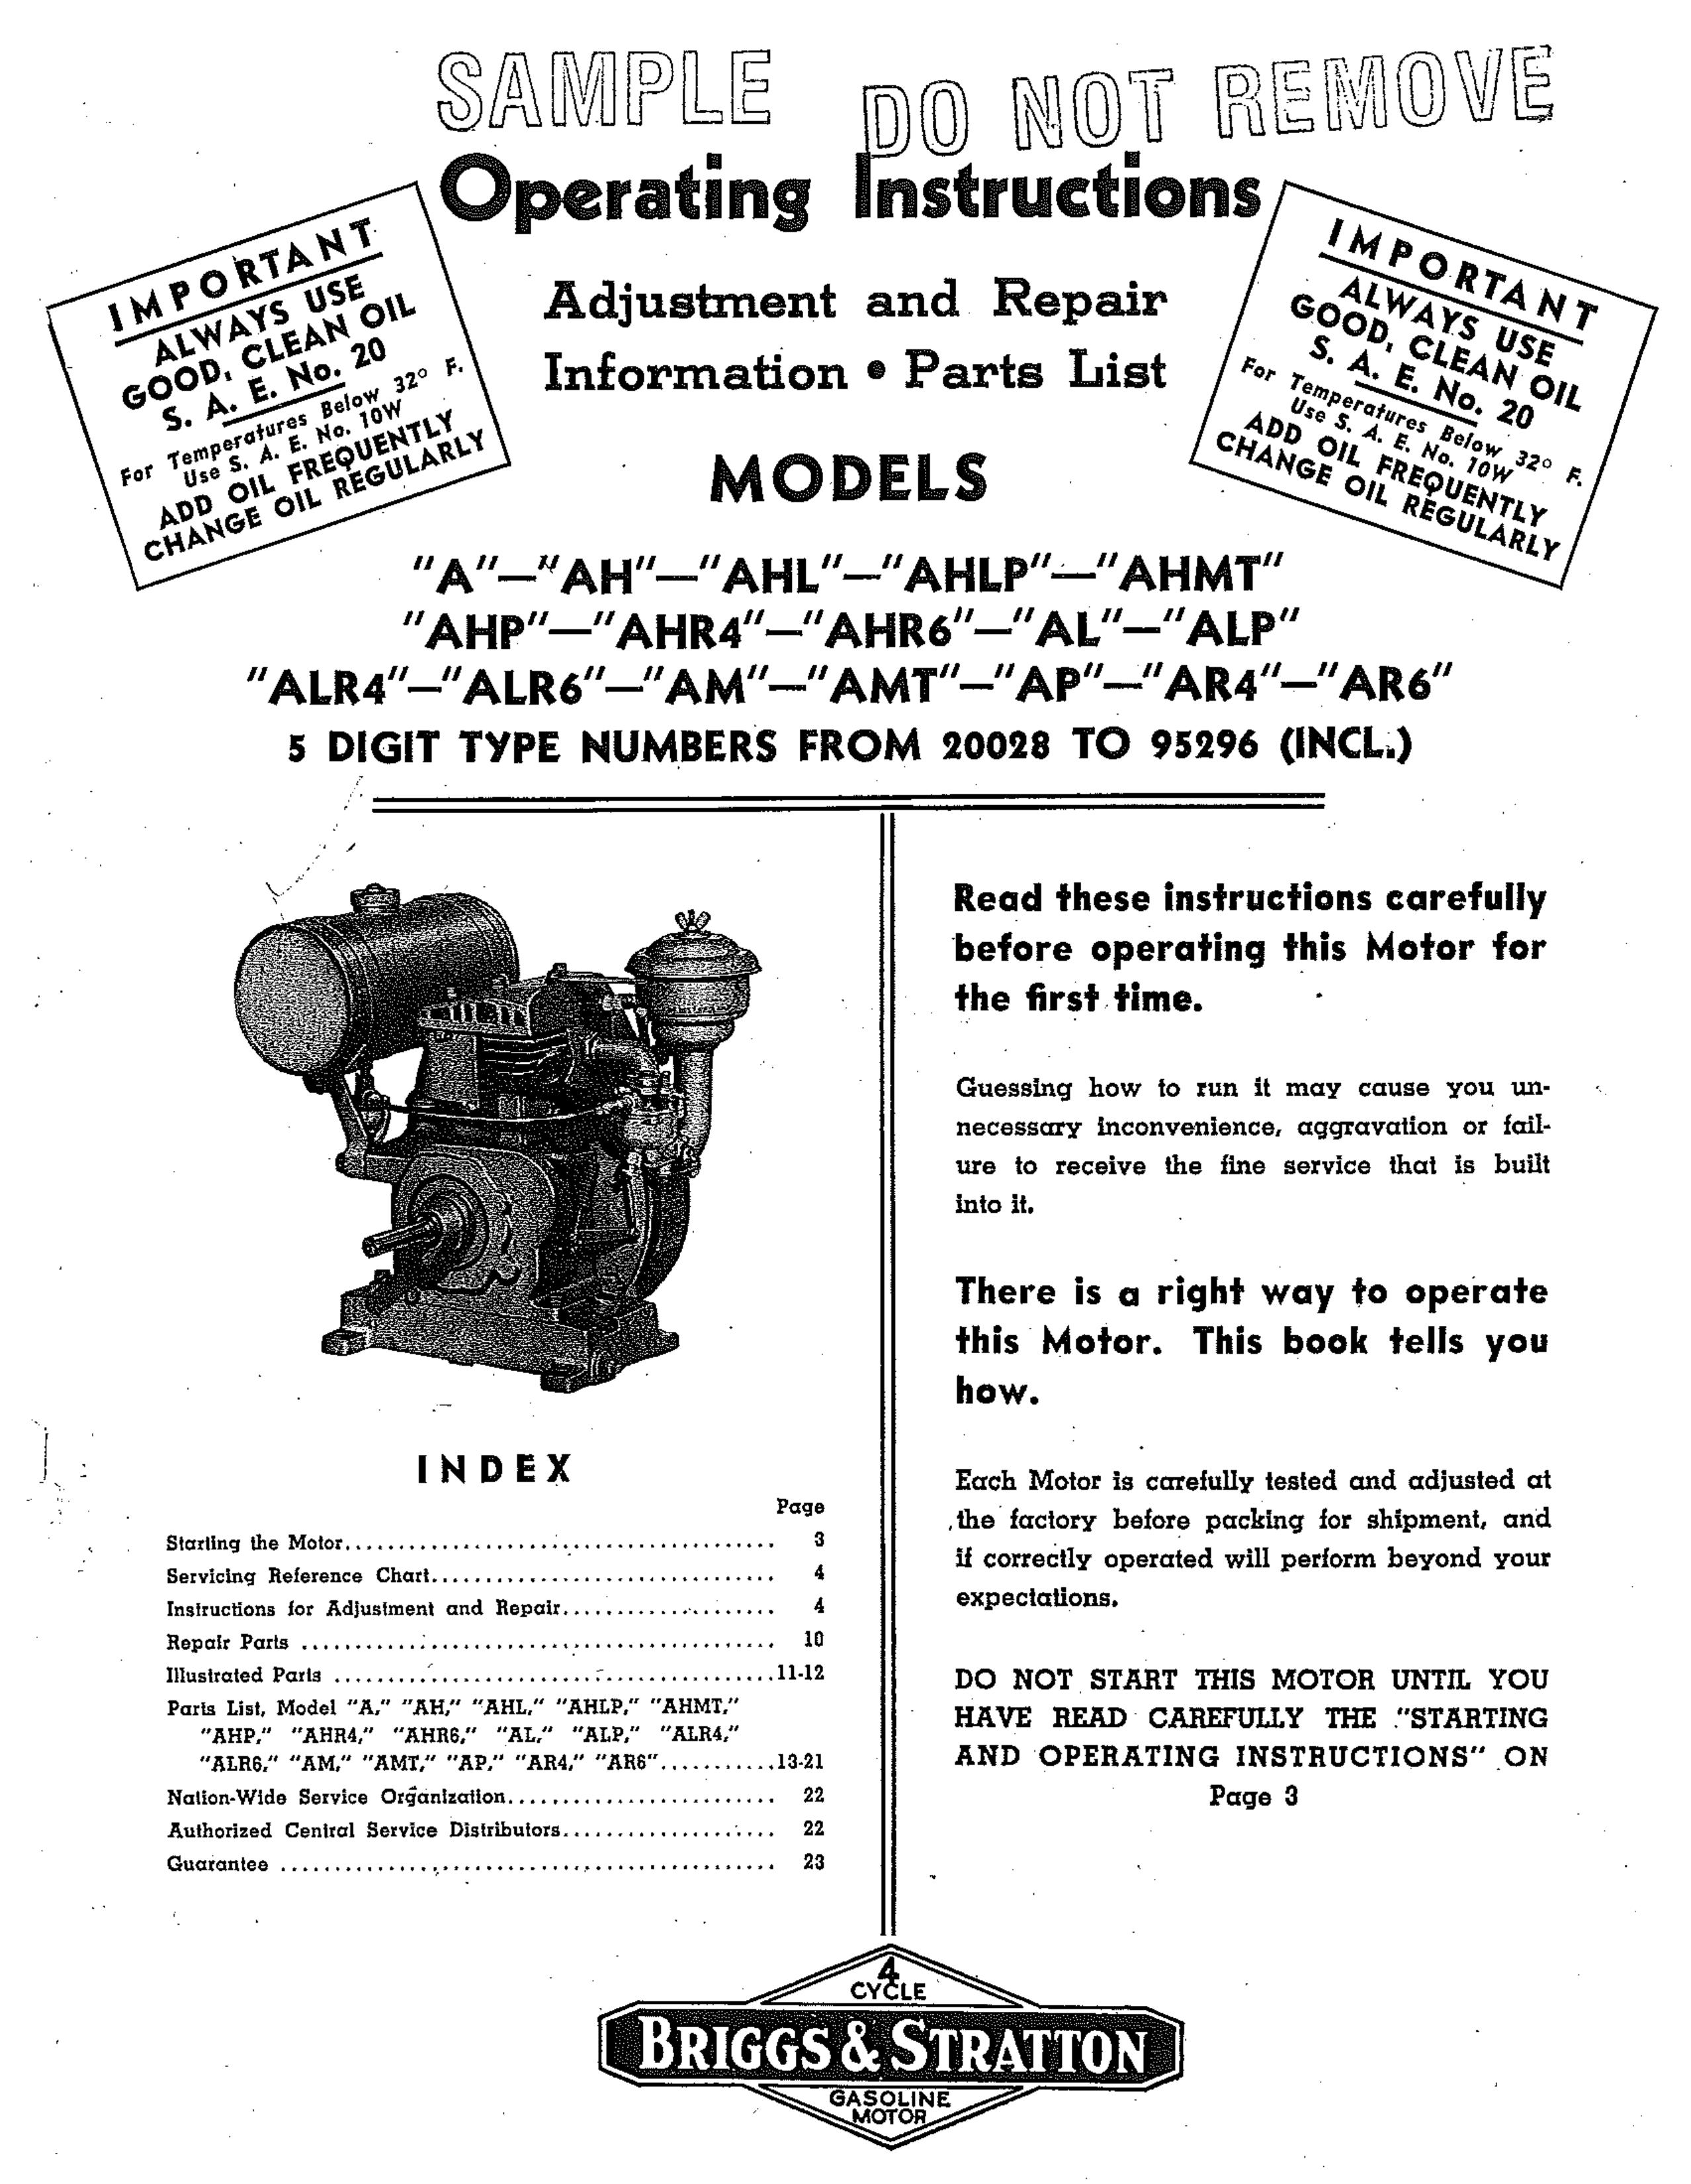 Briggs & Stratton AHP Outboard Motor User Manual